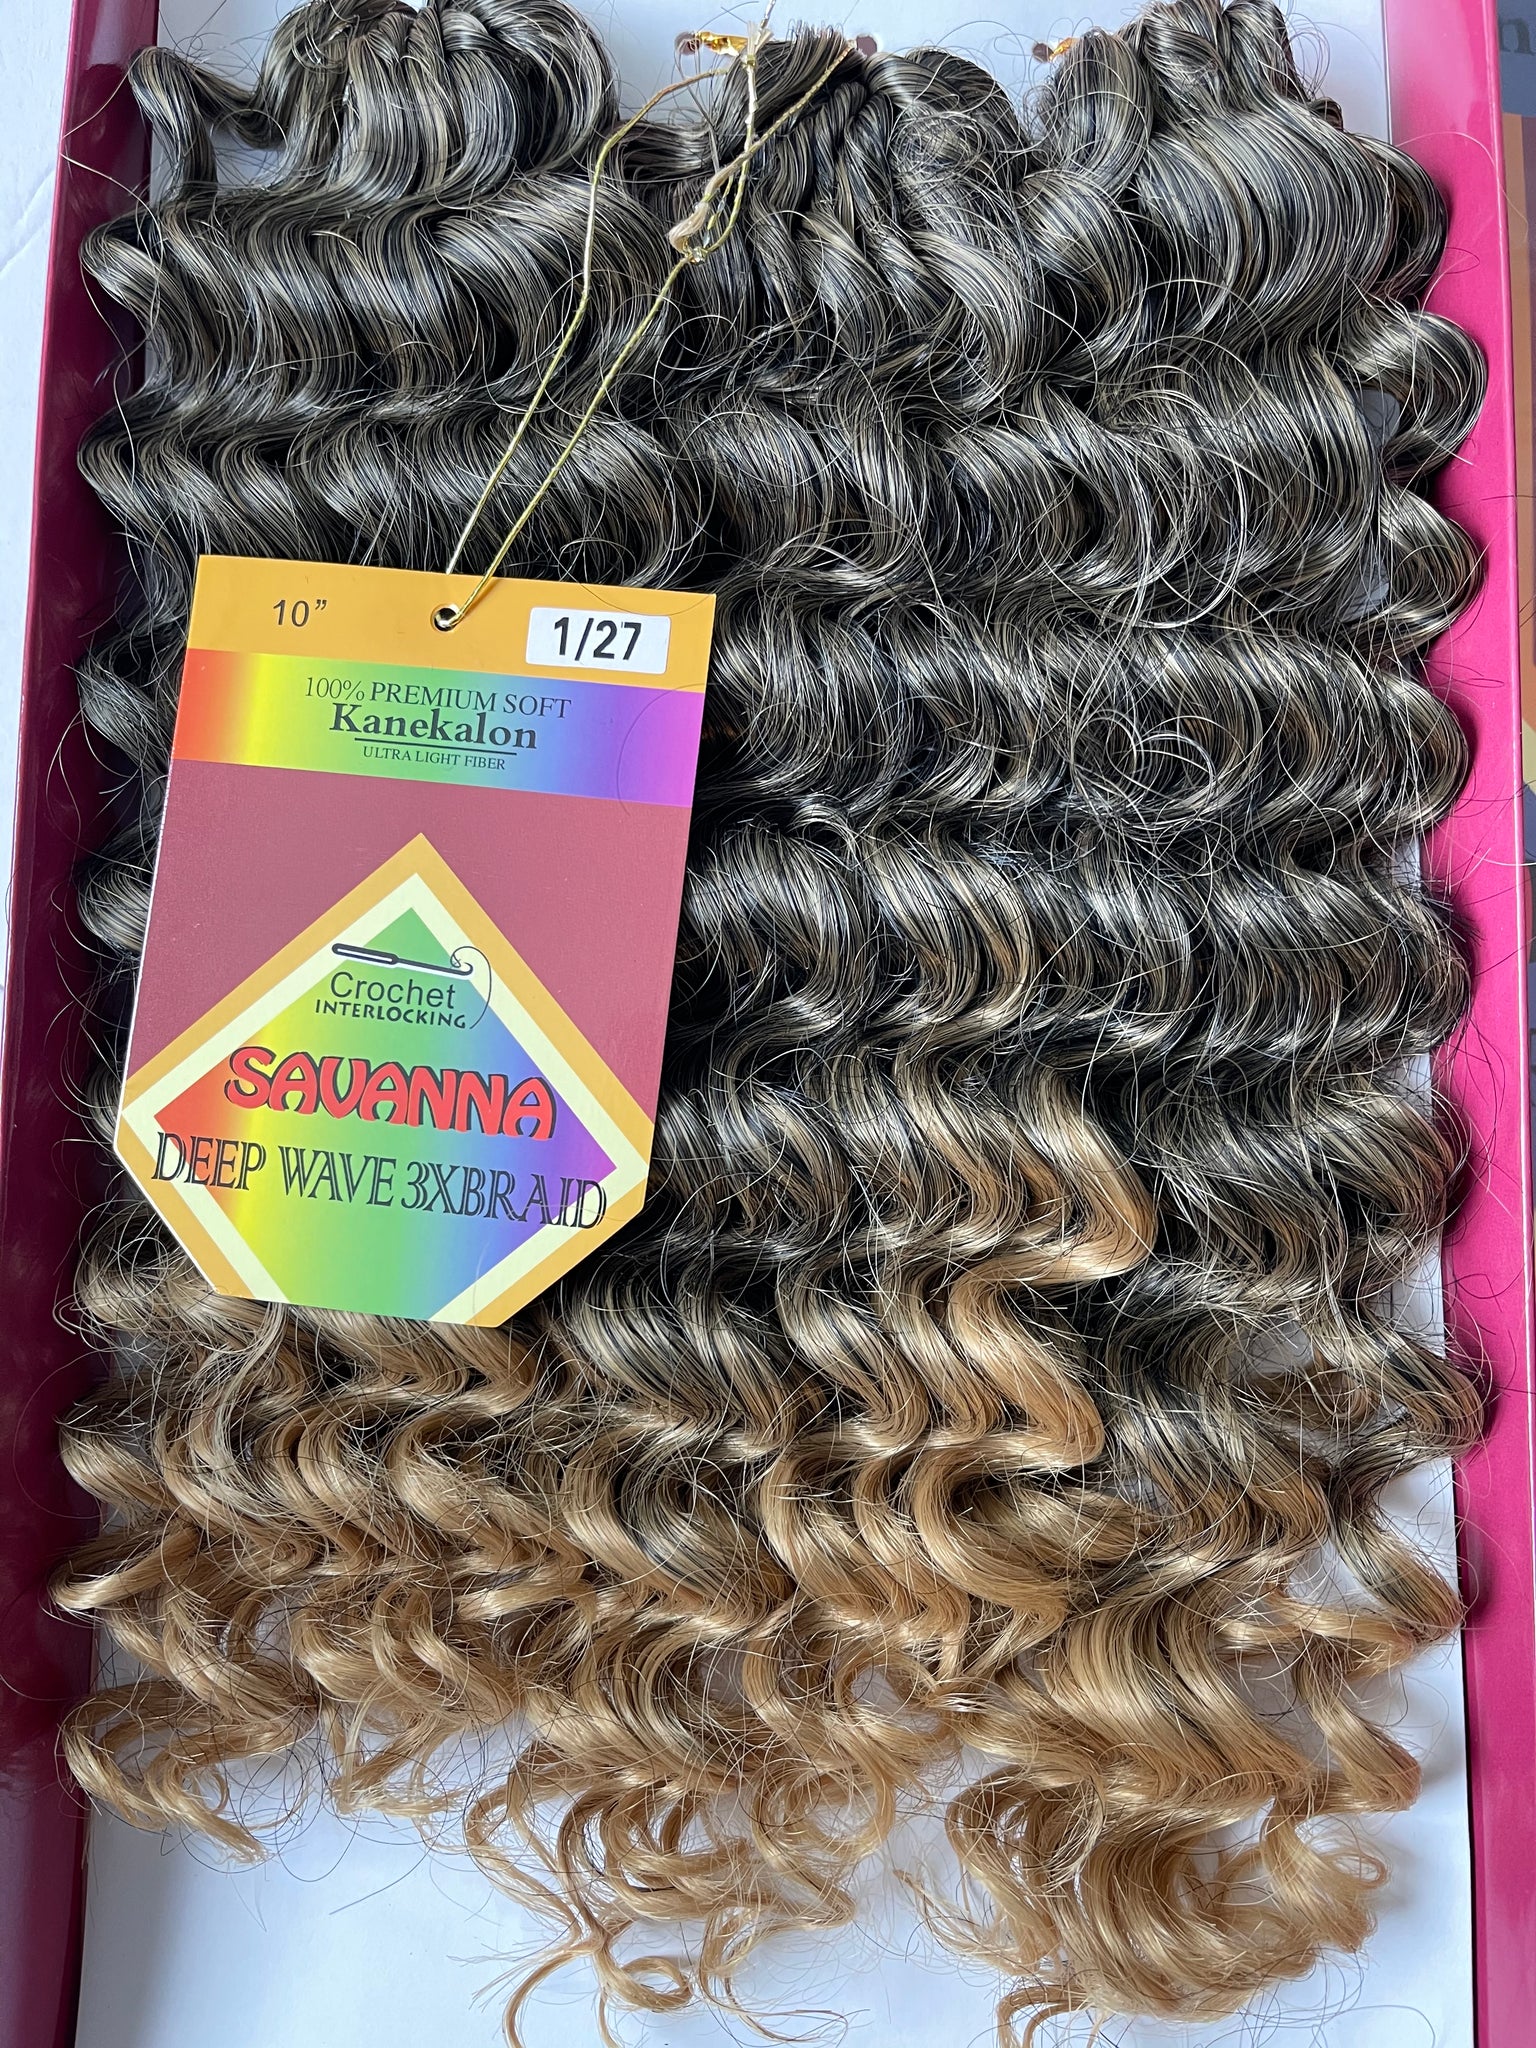 Freetress Deep Twist Crochet Braid Hair 22 colour 1B - Synthetic Ombr –  Hairnergy Braids